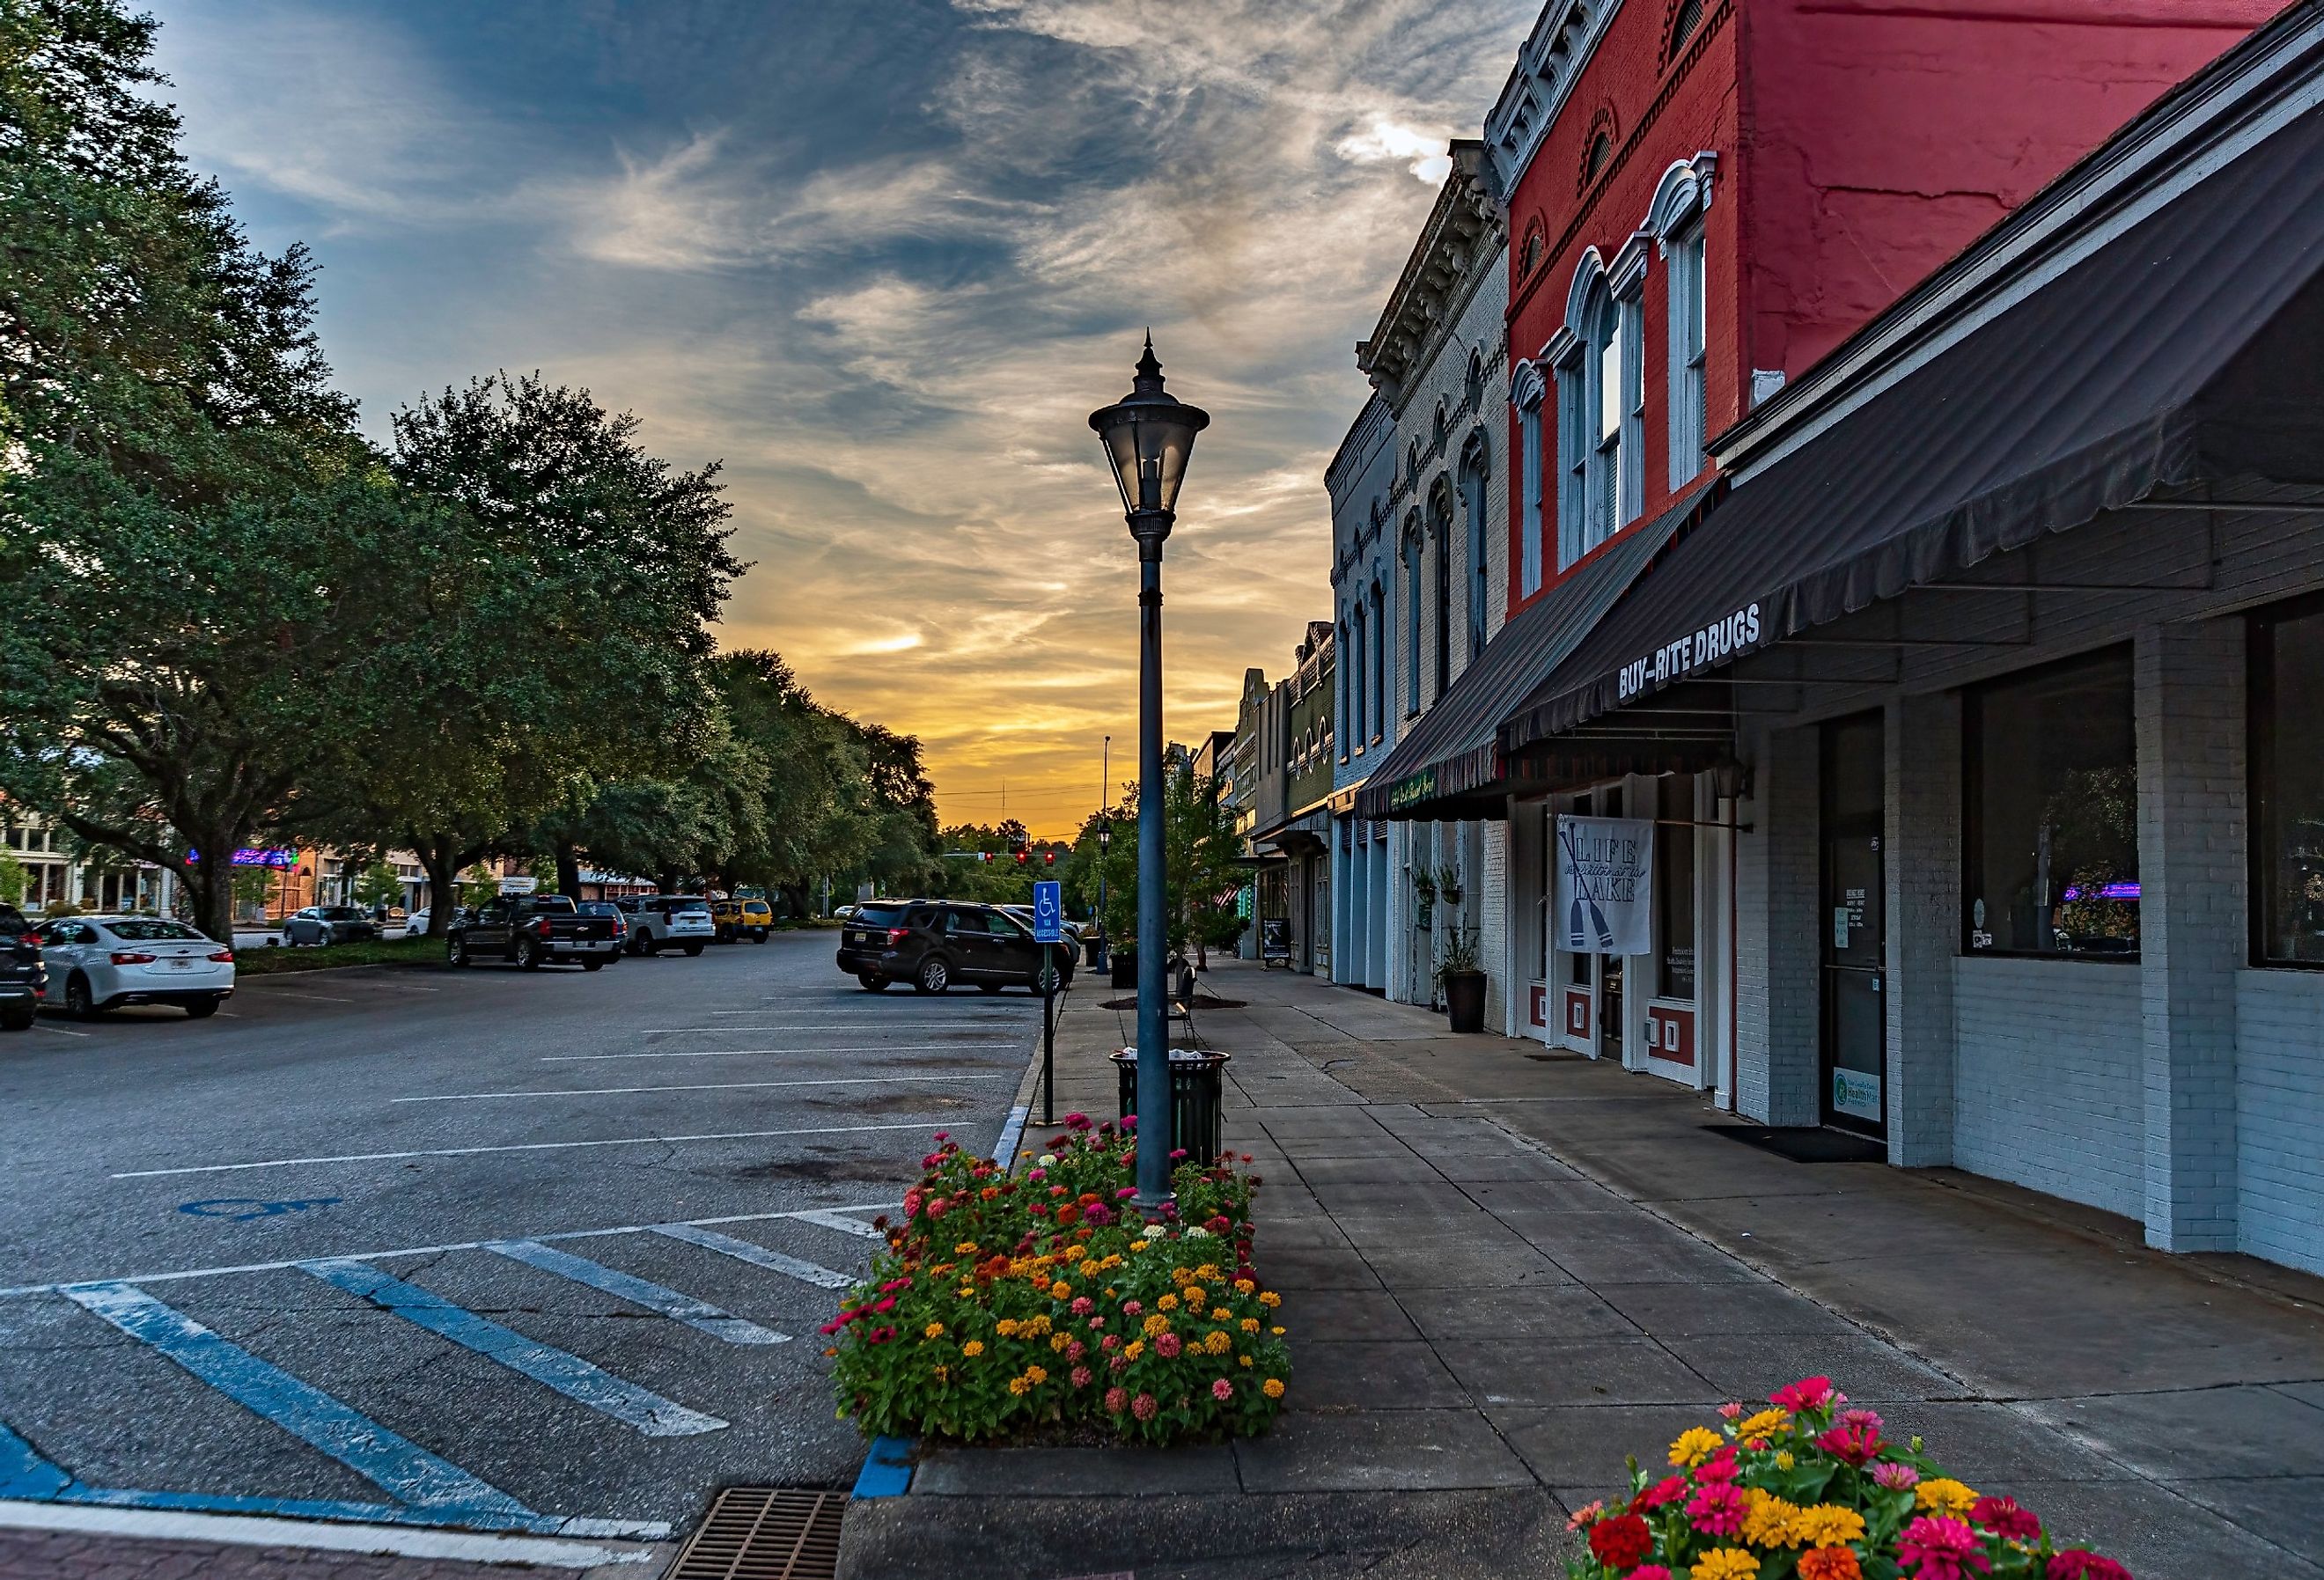 Historic downtown street in Eufaula, Alabama. Image JNix via Shutterstock.com